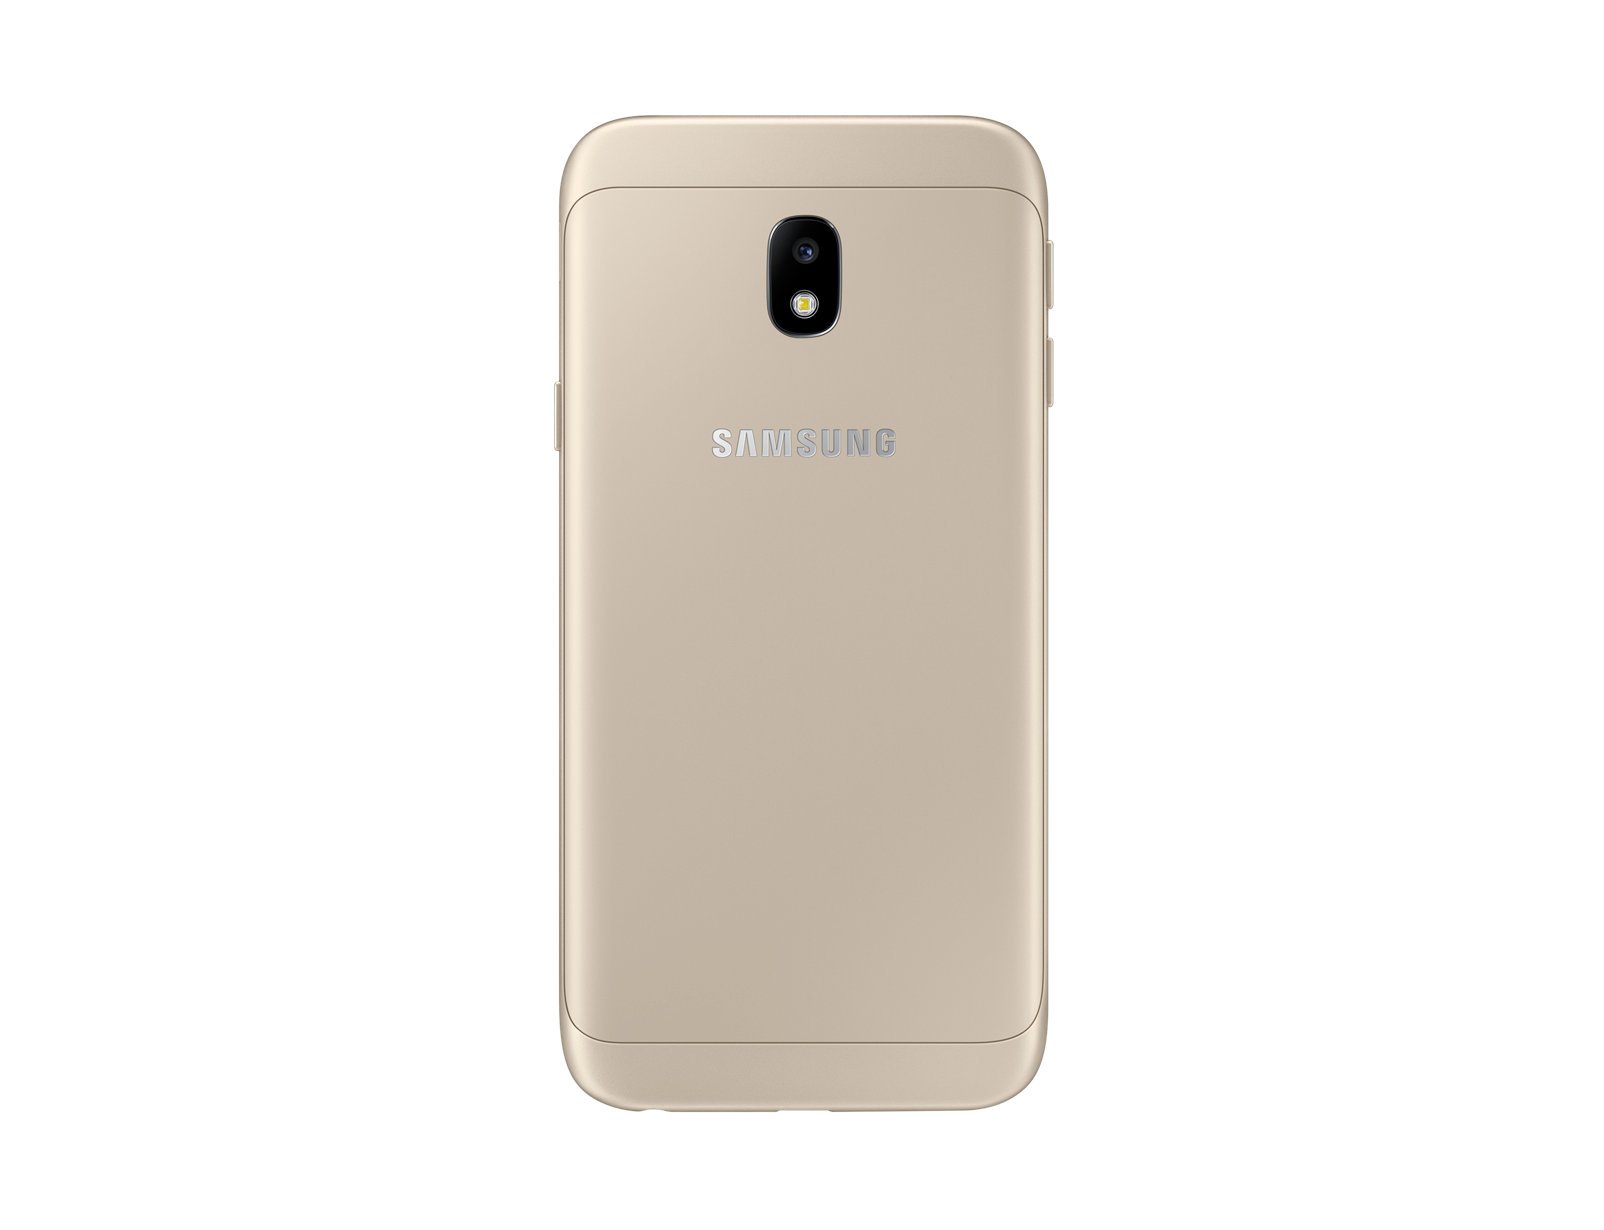 Samsung Galaxy J3 17 Specs Review Release Date Phonesdata